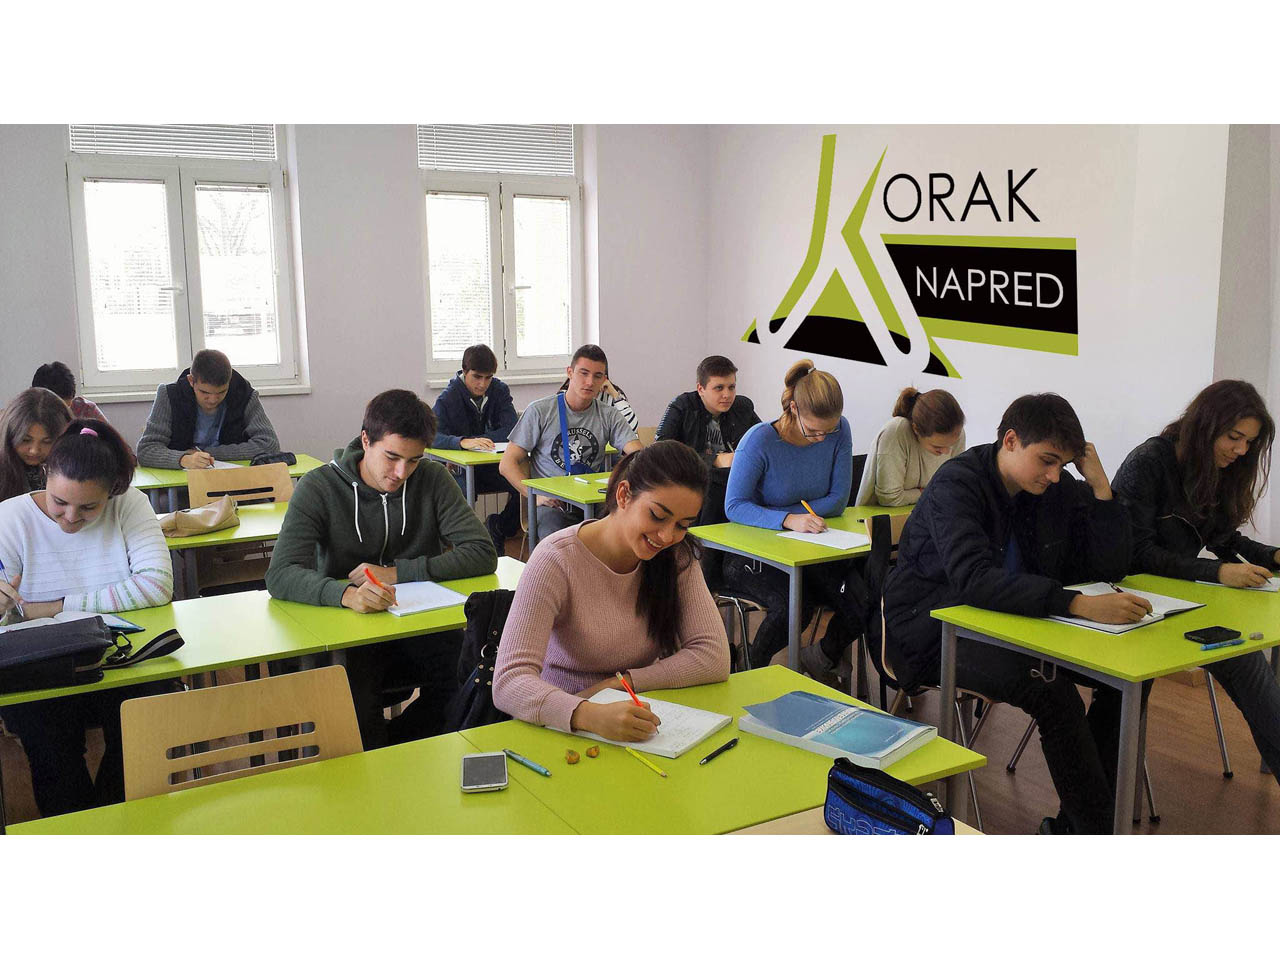 KORAK NAPRED EDUCATIVE CENTER Seminars, education Beograd